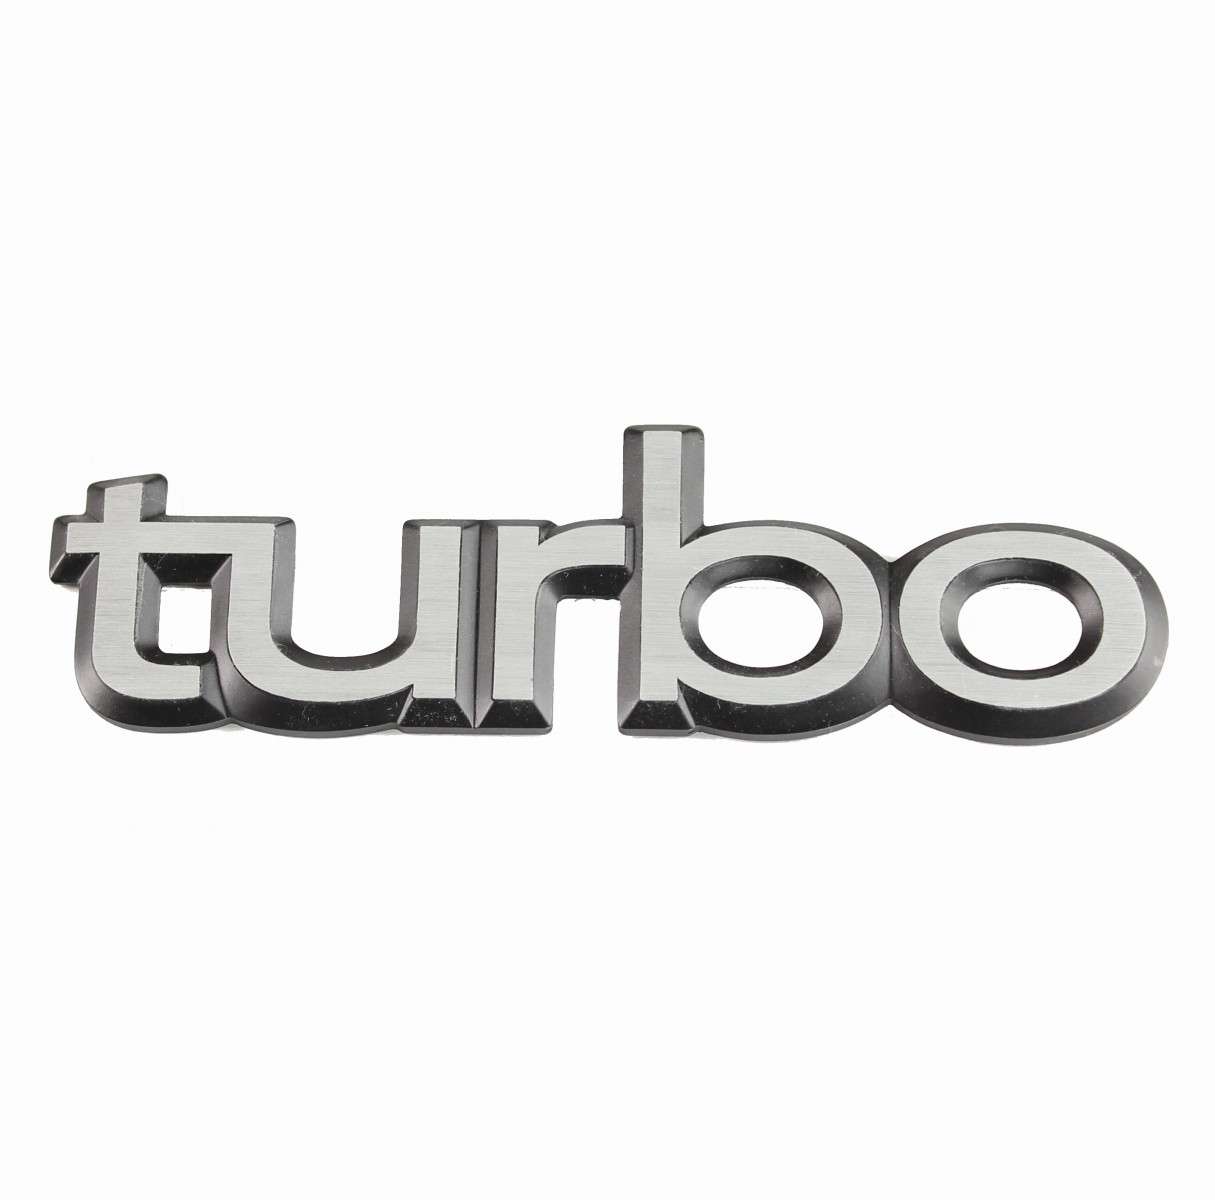 https://www.rbmperformance.com/rbm_images/produits/genuine_saab_turbo_trunl_emblem_for_saab_900_ref_9280298.jpg